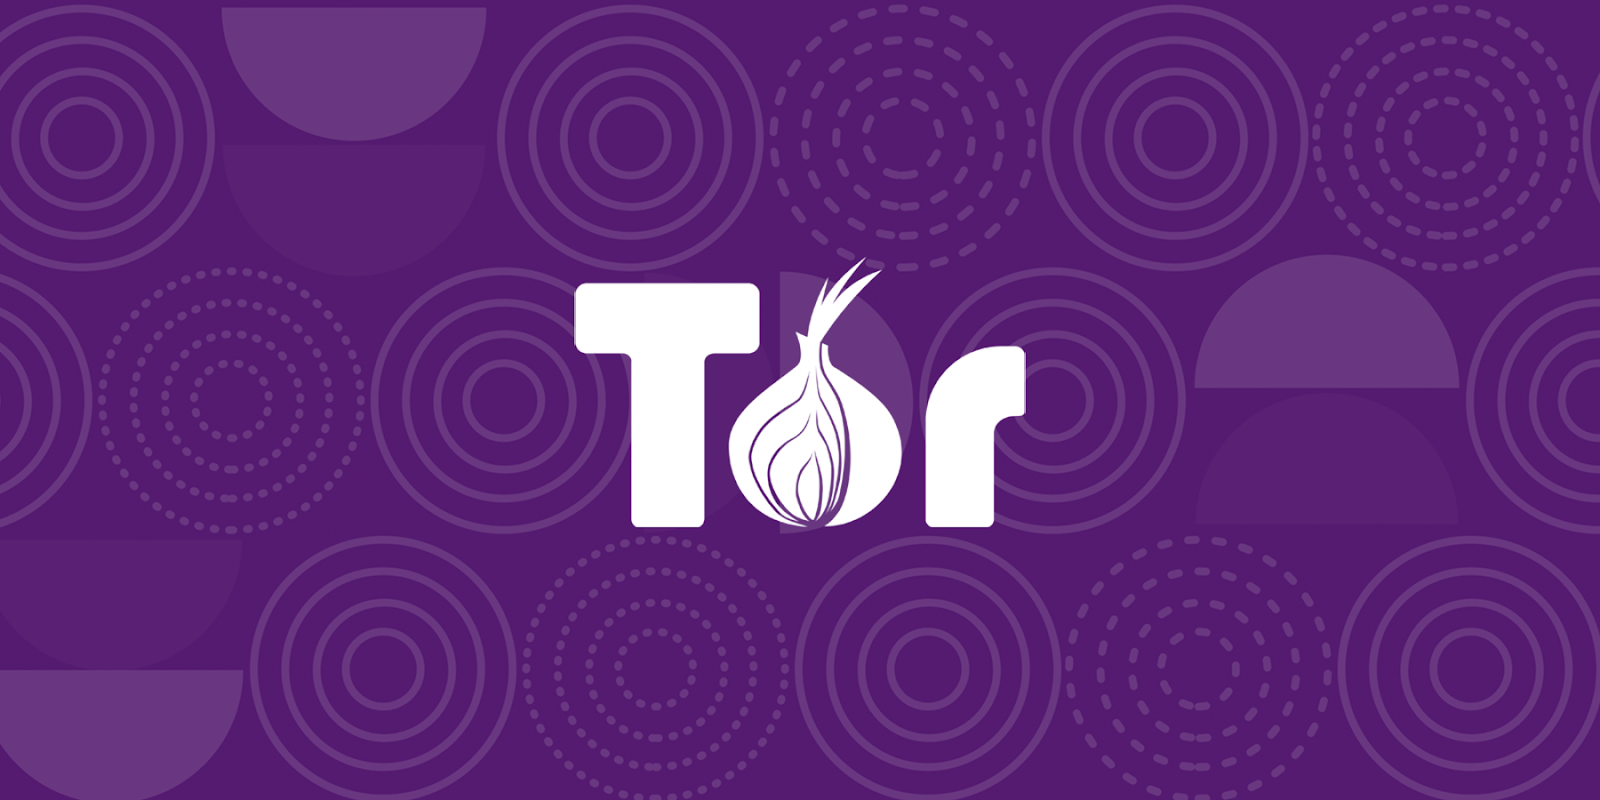 1. Tor Browser